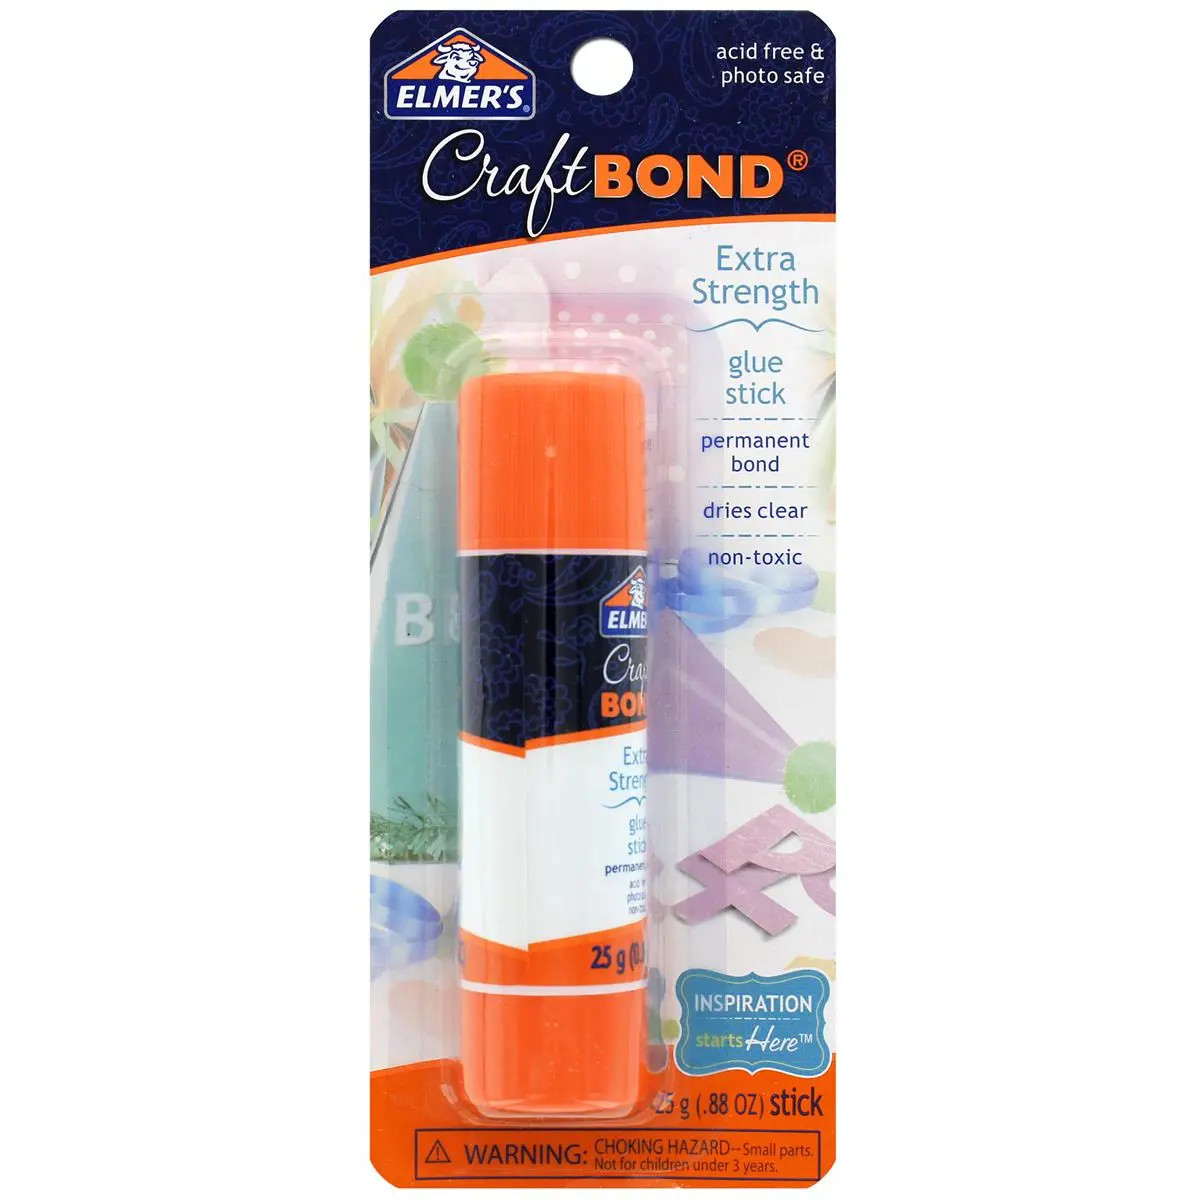 Elmer's Craft Bond Multi-Purpose Spray Glue